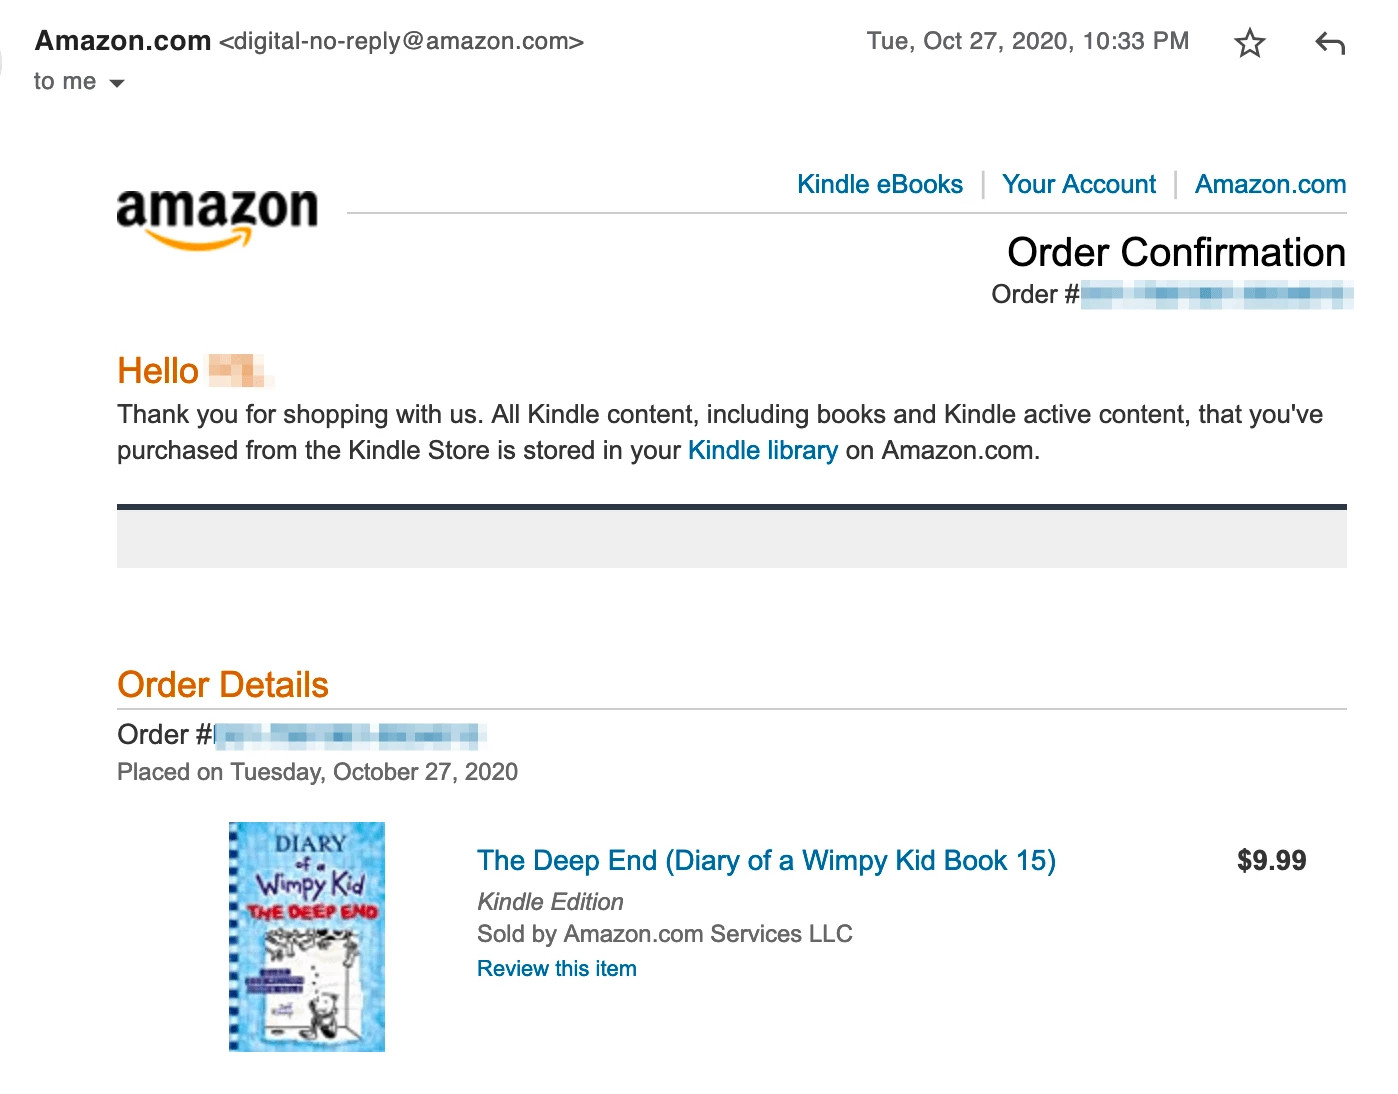 Amazon Kindle order purchase email